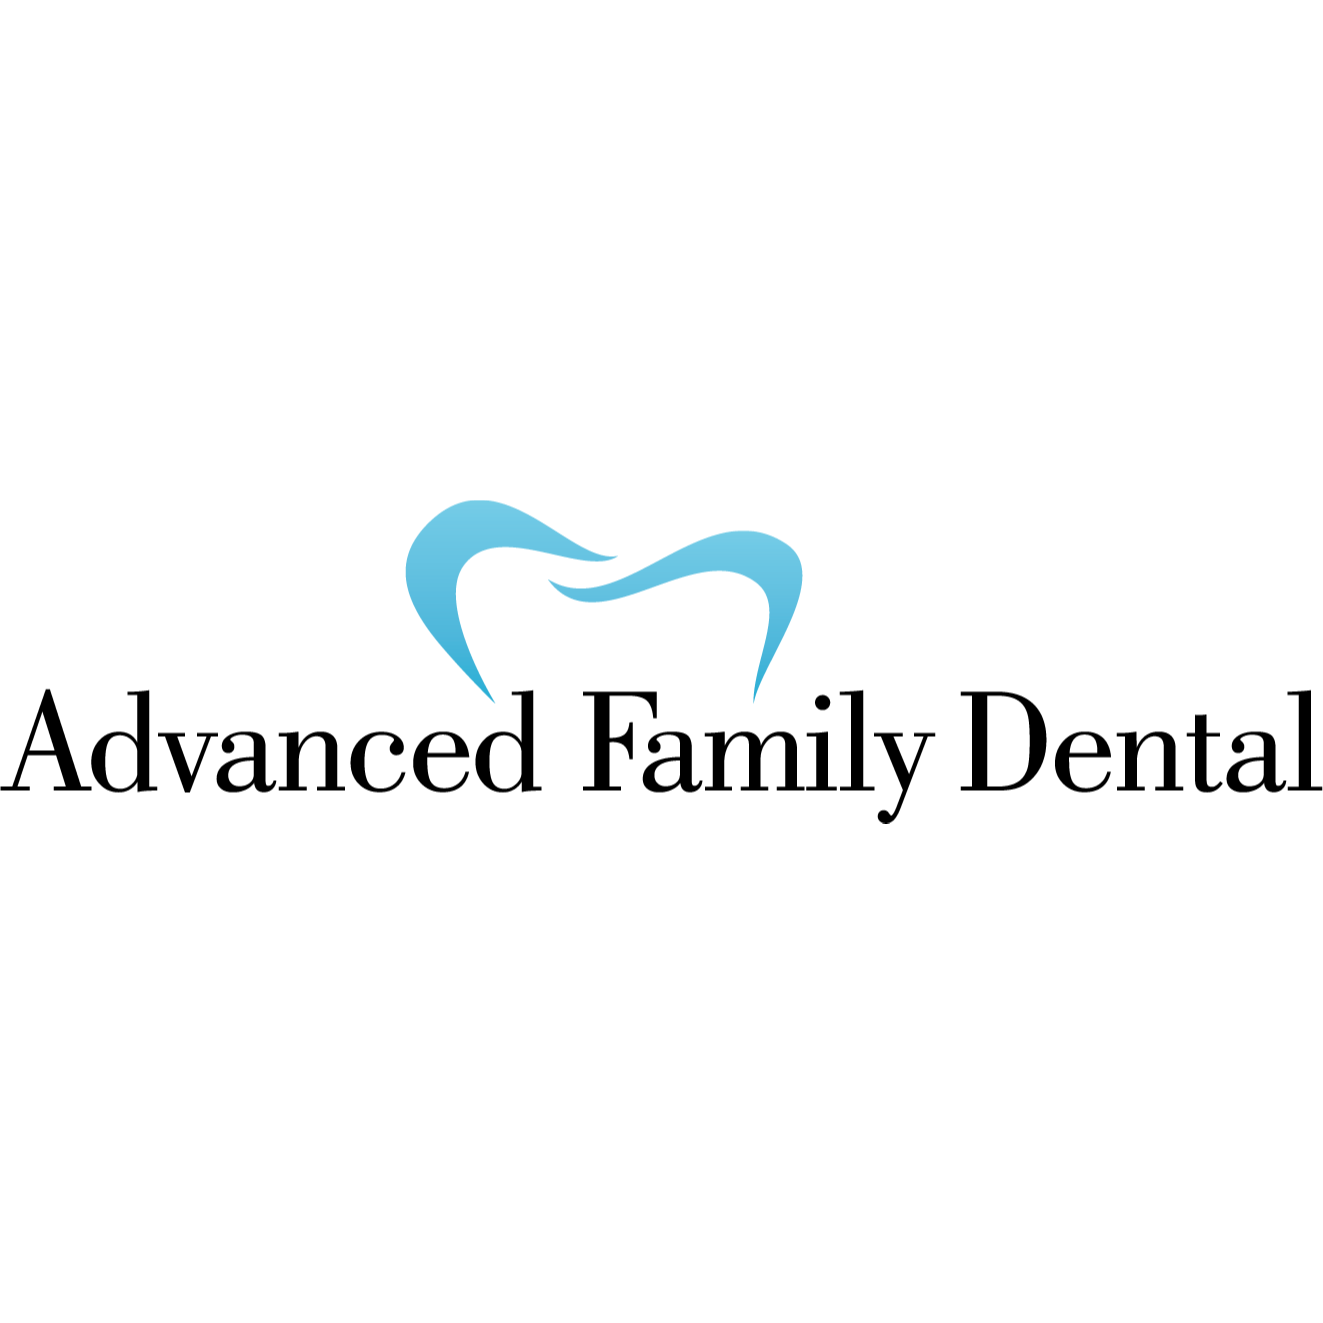 Advanced Family Dental - Chicago, IL 60629 - (773)767-1554 | ShowMeLocal.com